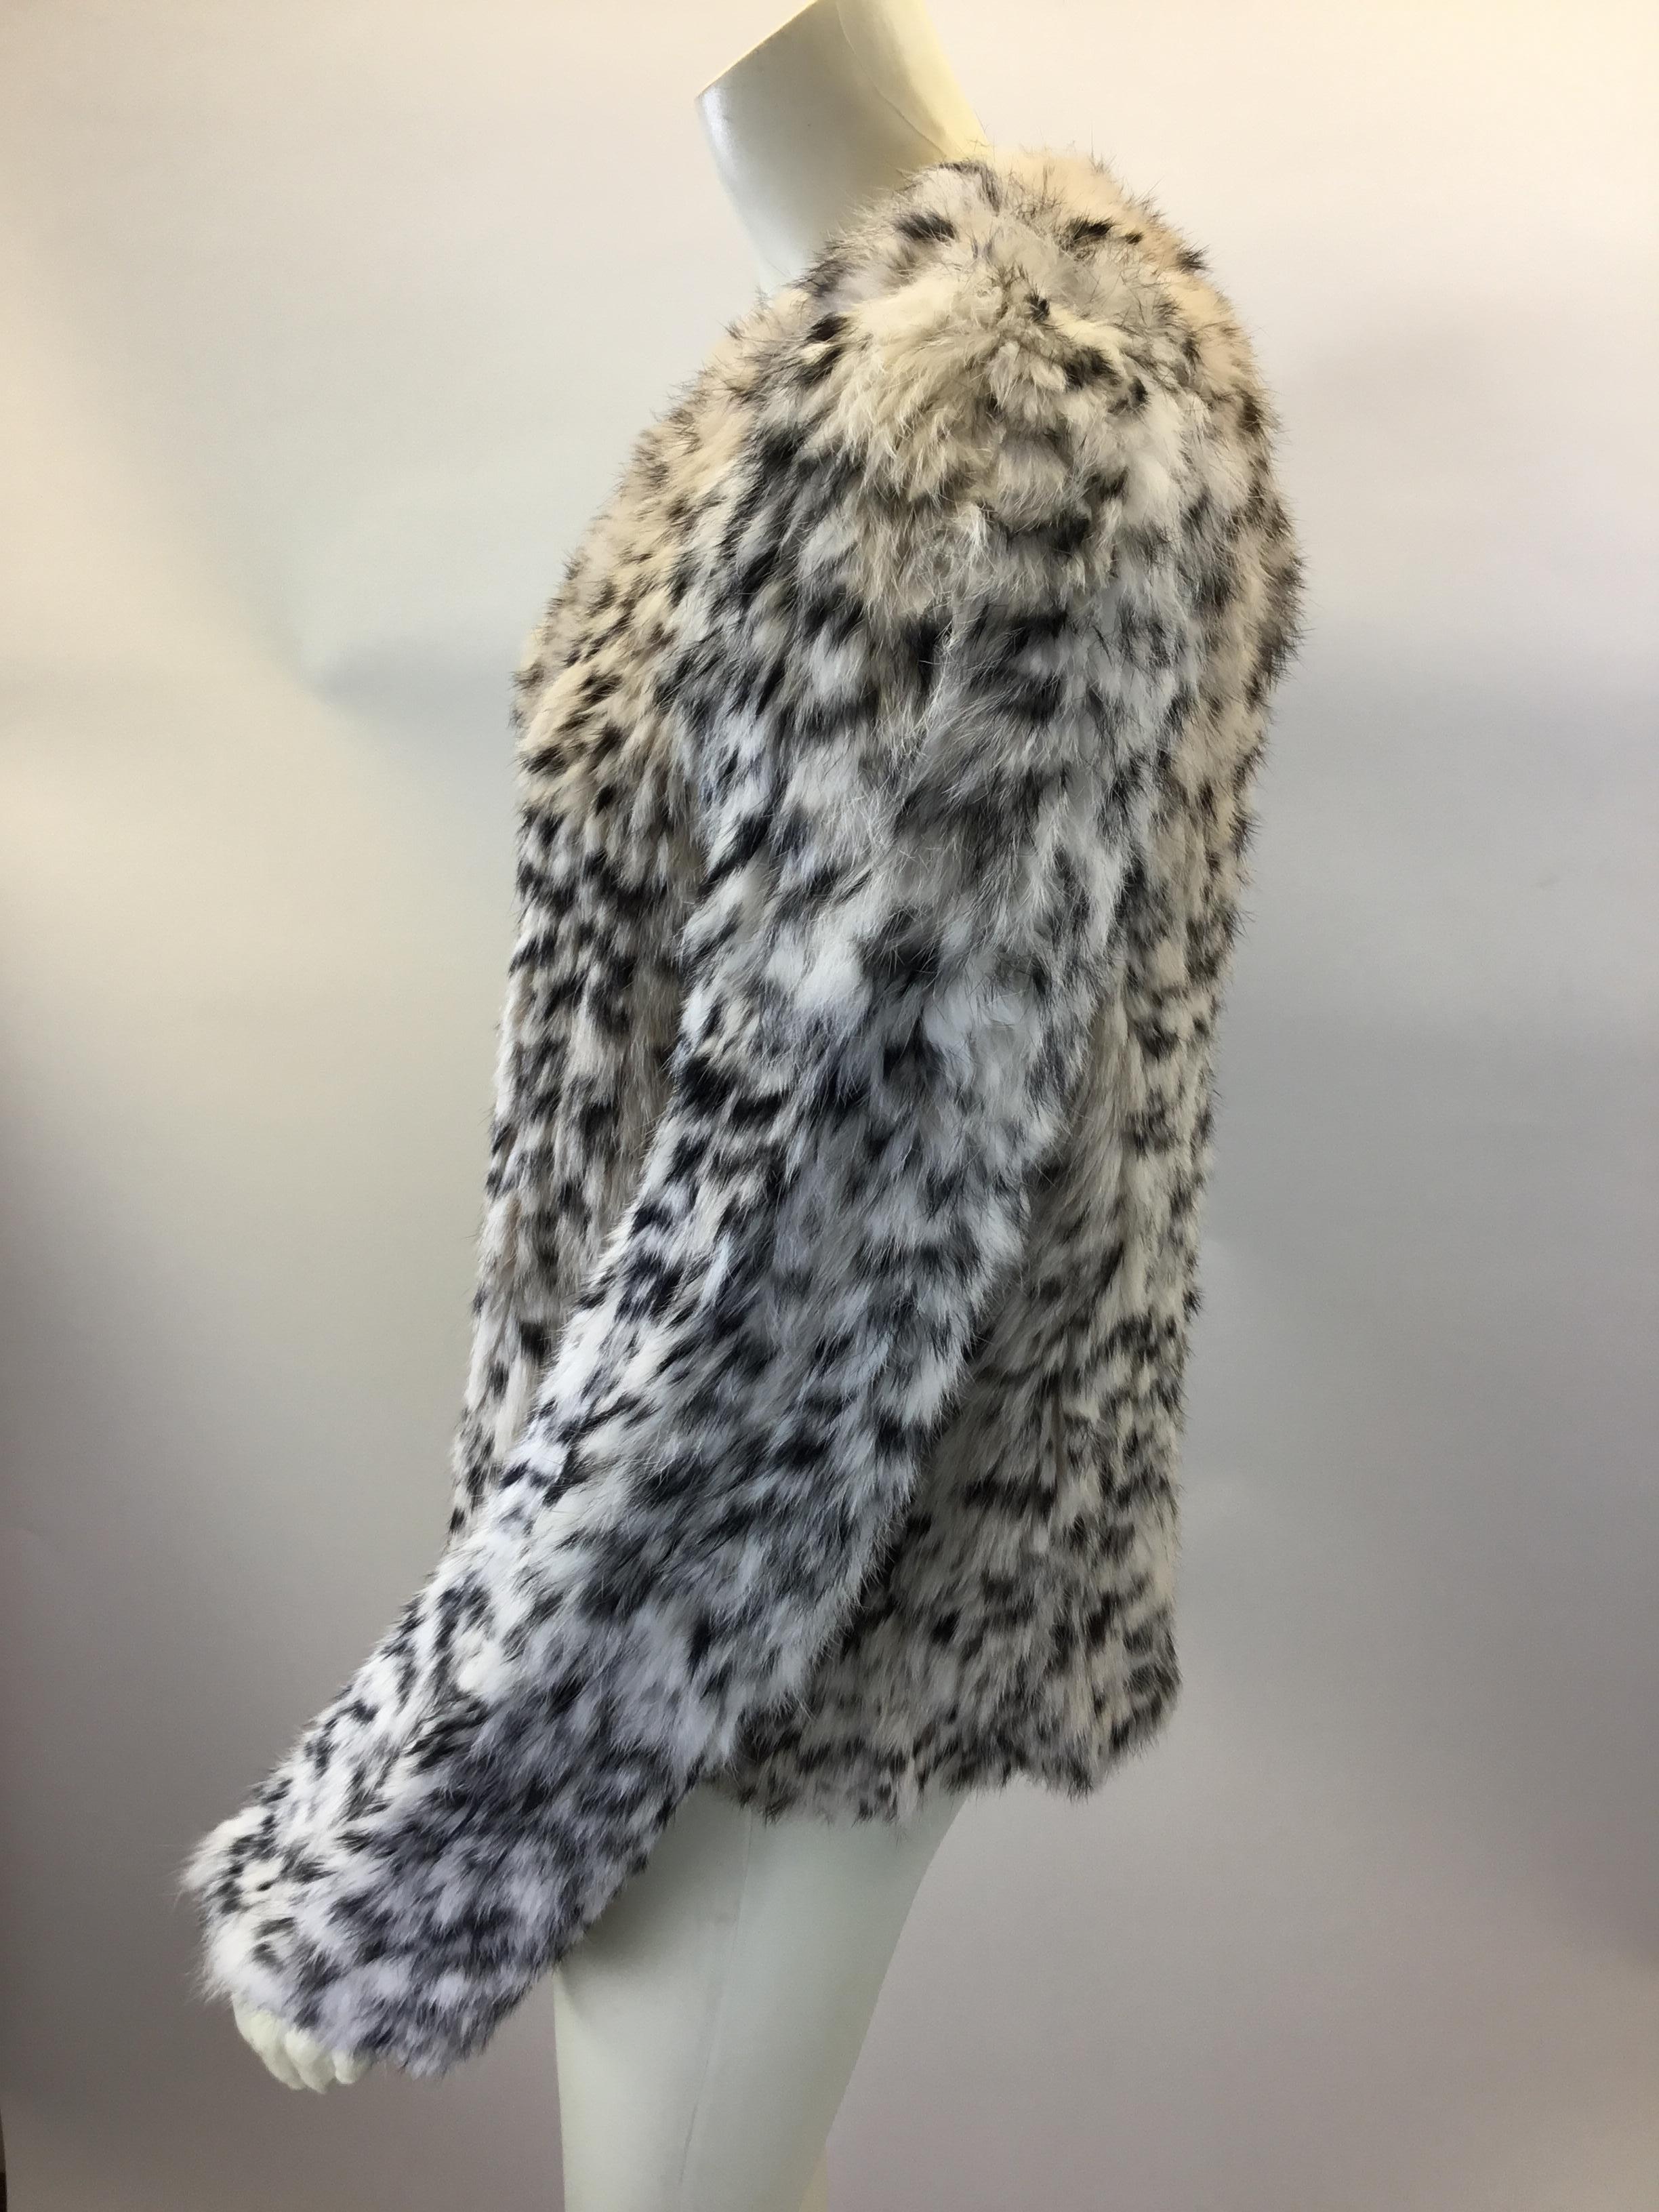 Ulla Johnson Knit Rabbit Fur Jacket NWT
$850
Made in China
100% Dyed Rabbit Fur
Size Large
Length 22